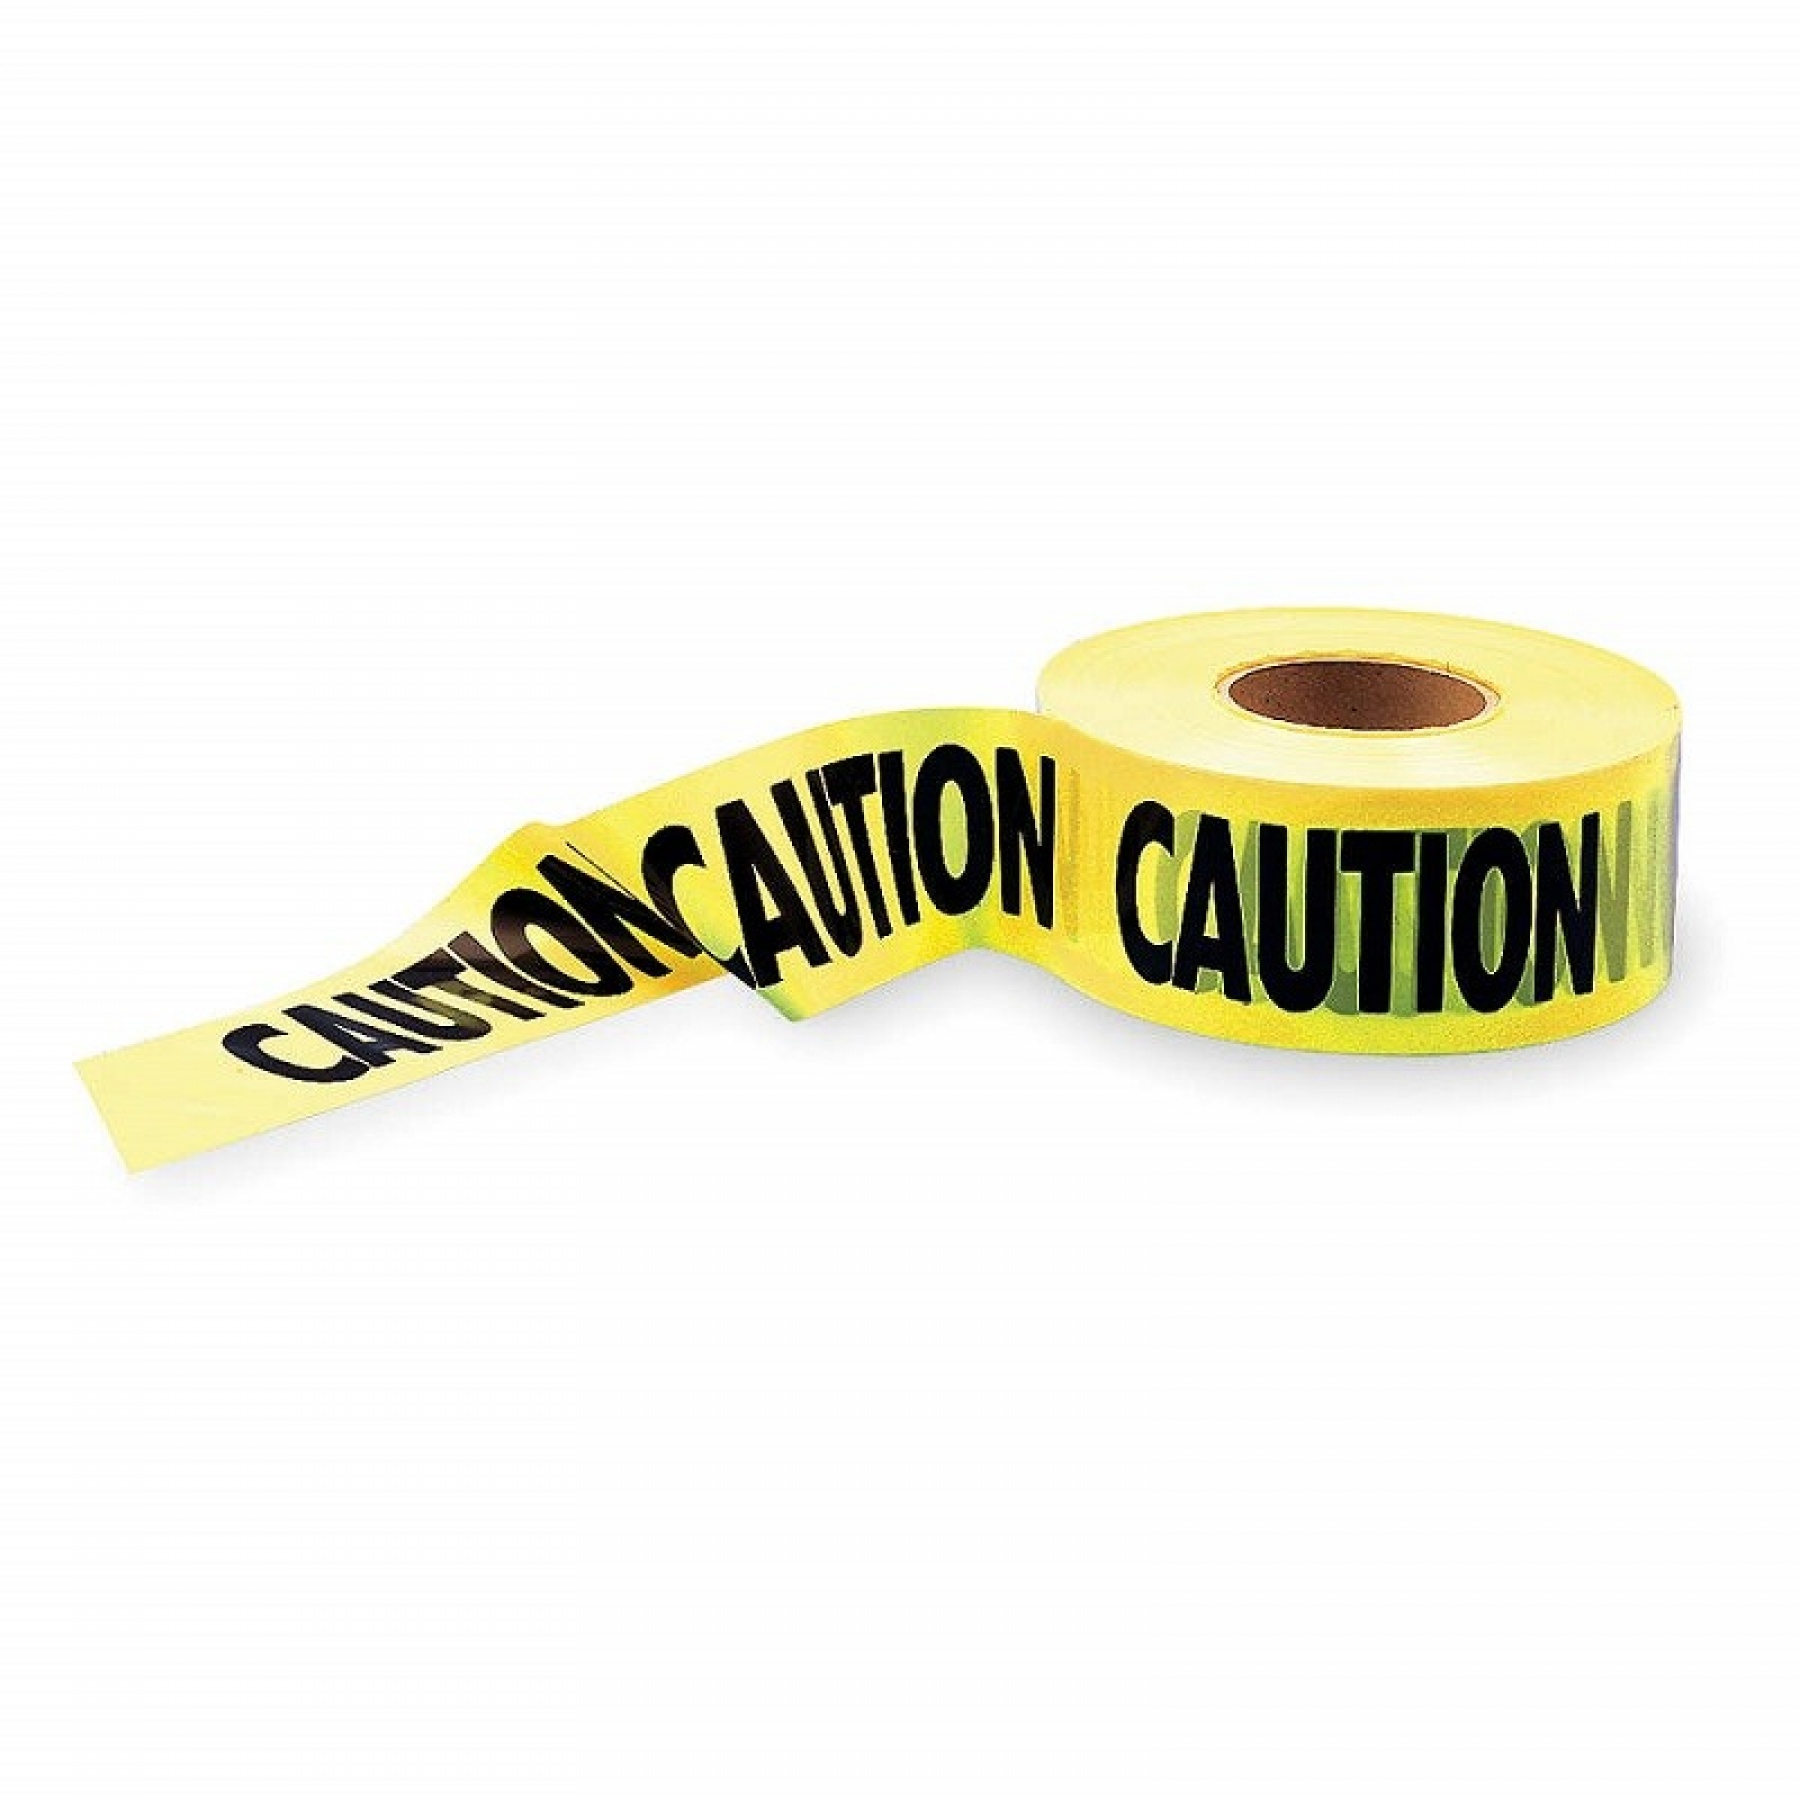 164 Feet Caution Barricade Tape Warehouse Safety Warning Waterproof Yellow Roll 